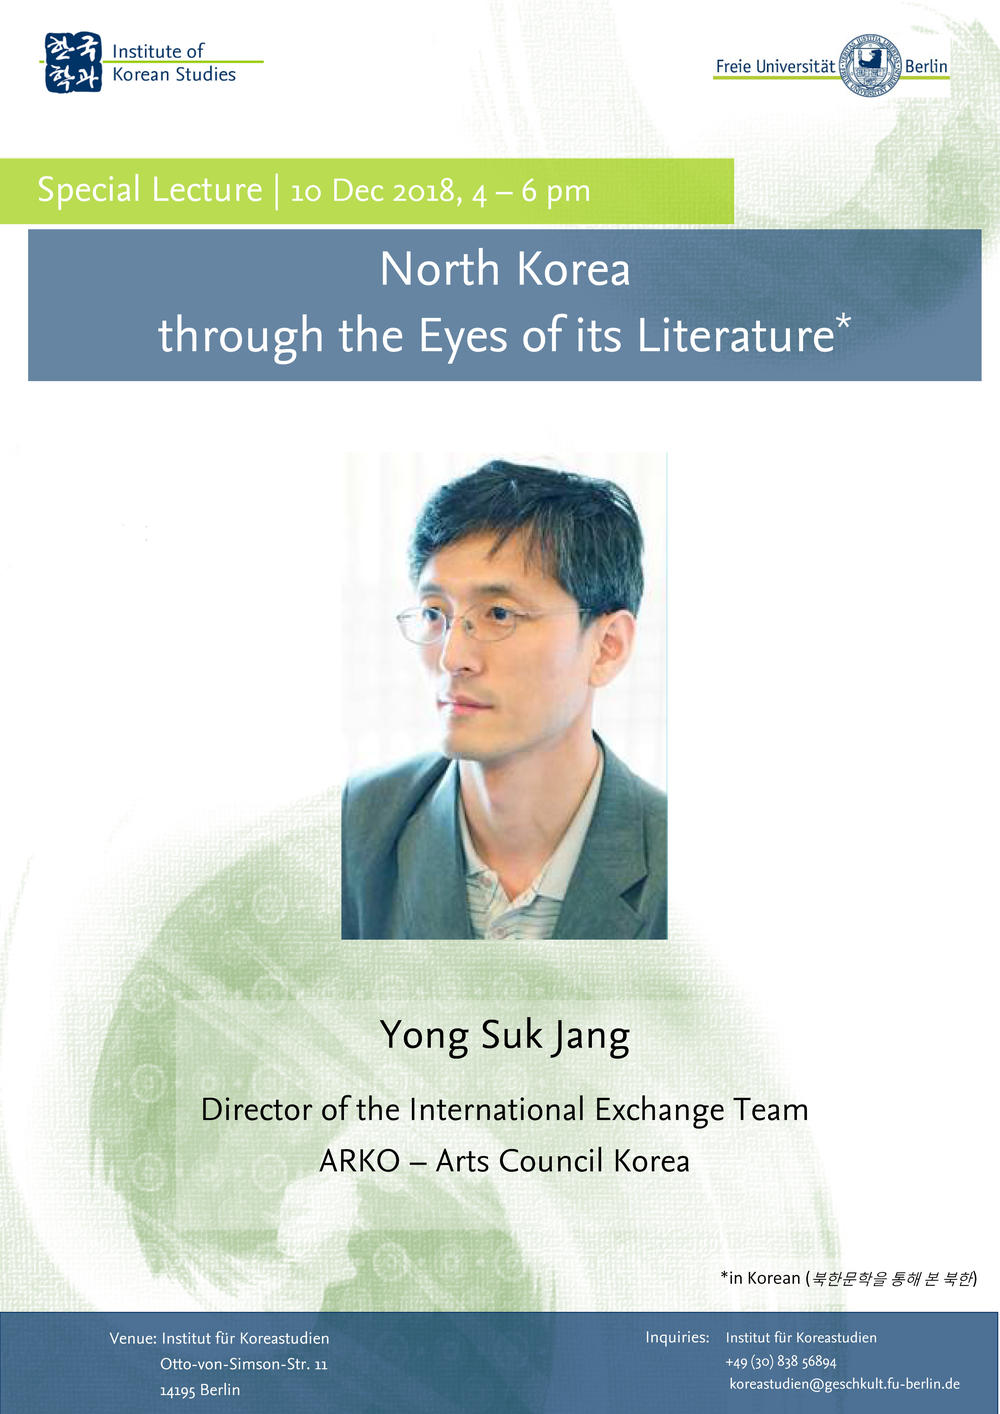 Special Lecture mit Yong Suk Jang (Director of International Exchange Team at Arts Council Korea)